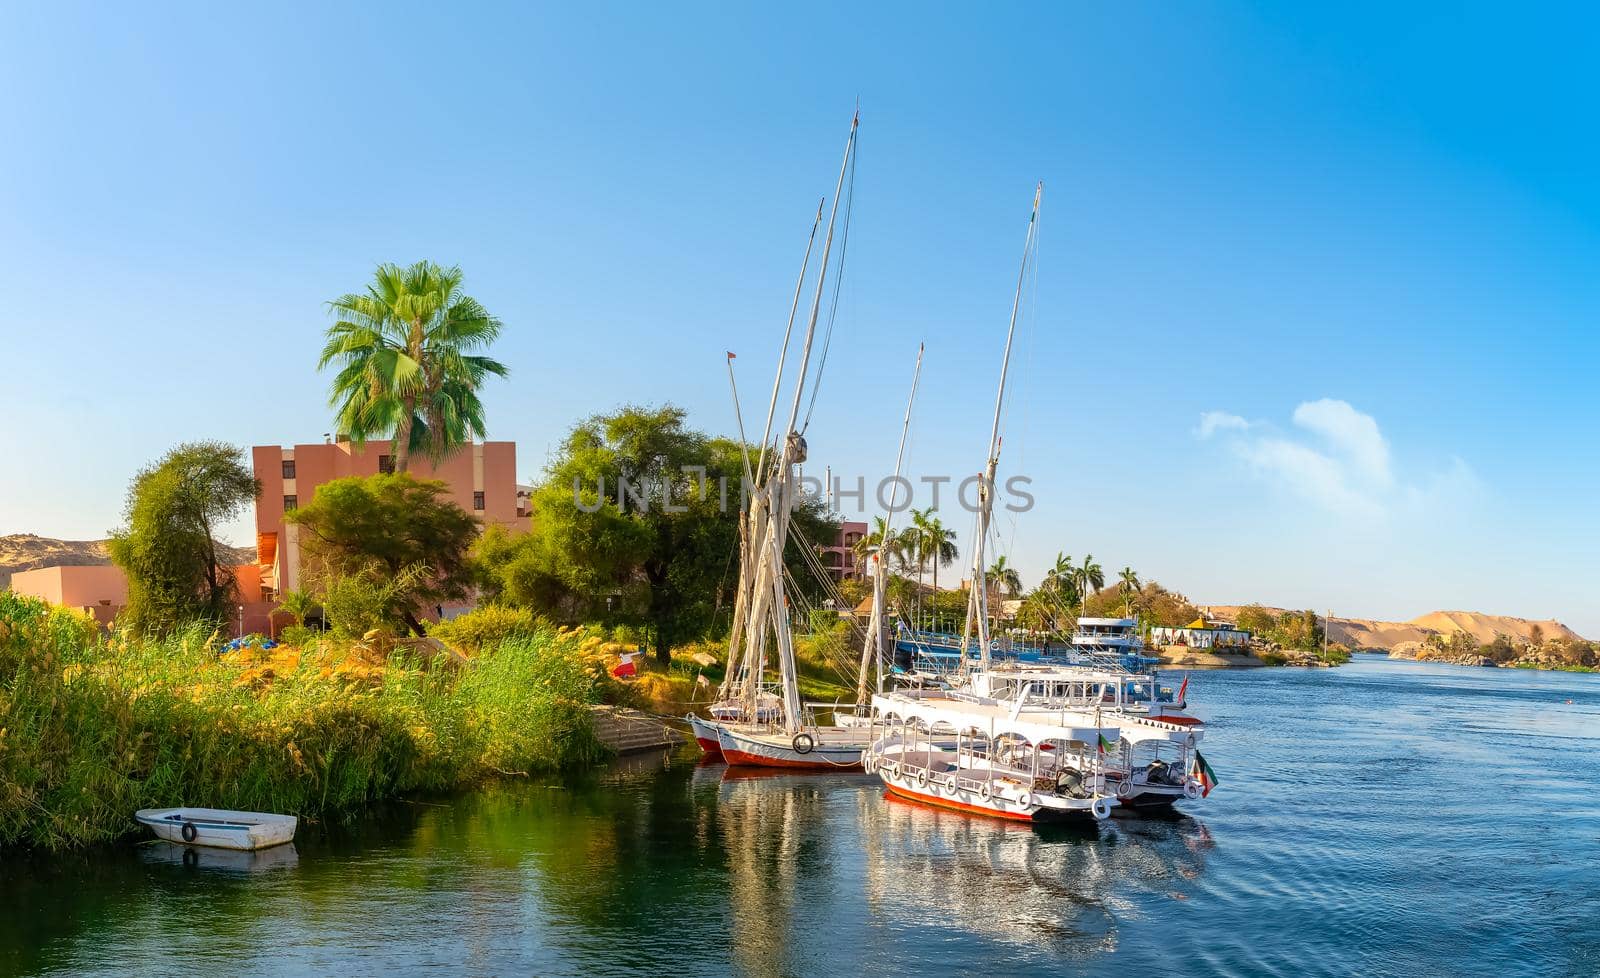 Nile coastline and boats by Givaga